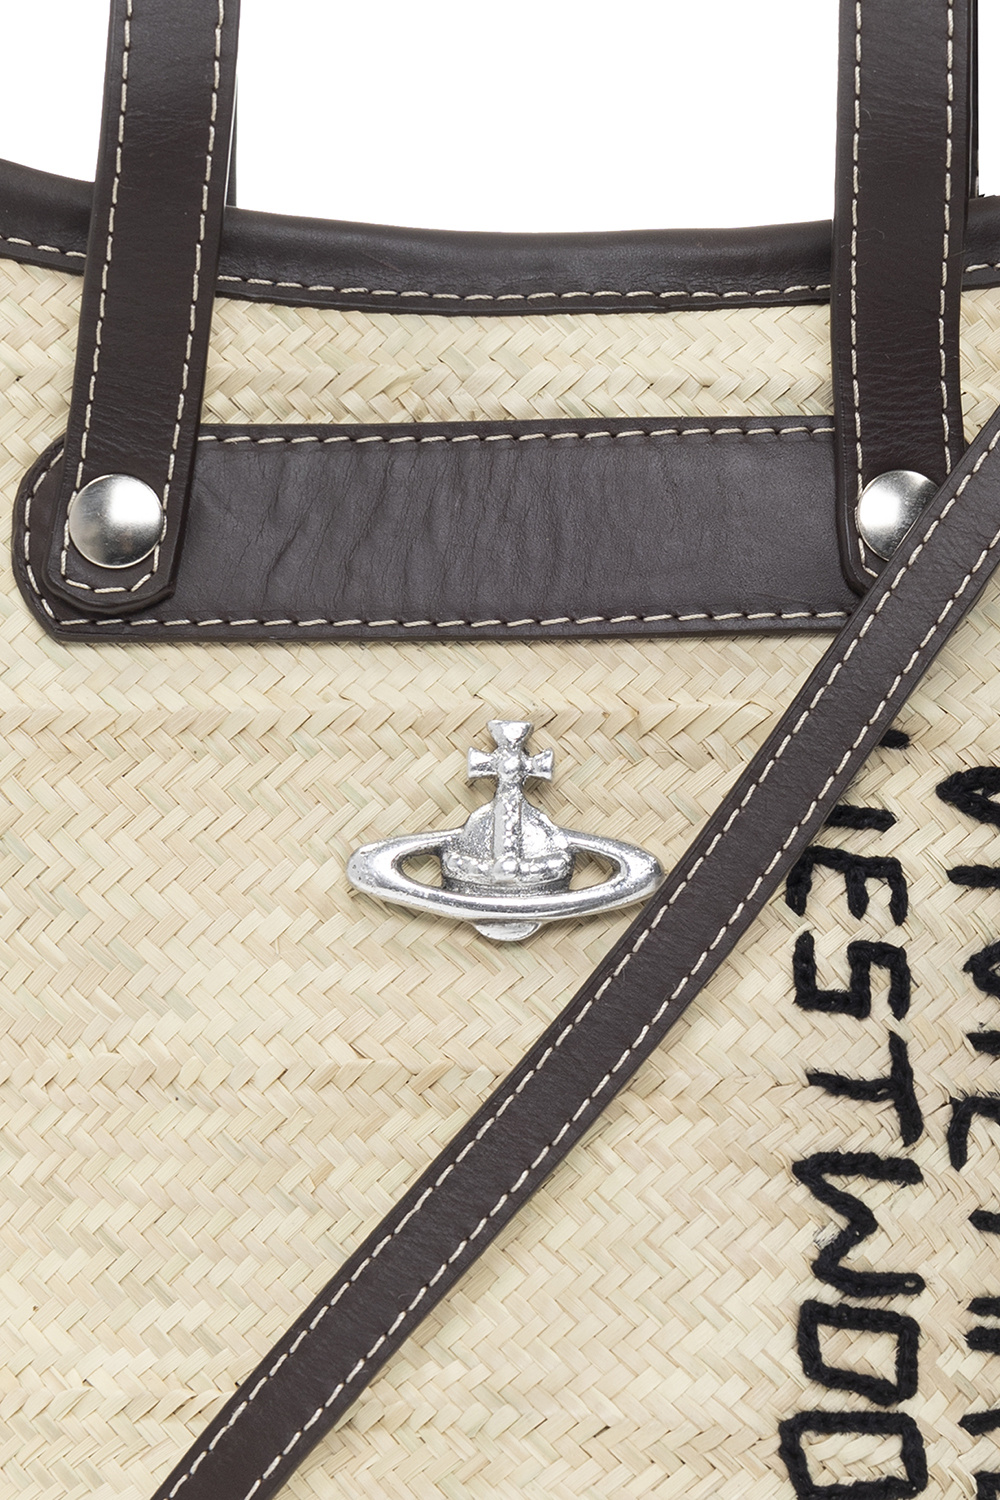 Vivienne Westwood The ‘Made in Kenya’ collection shopper bag